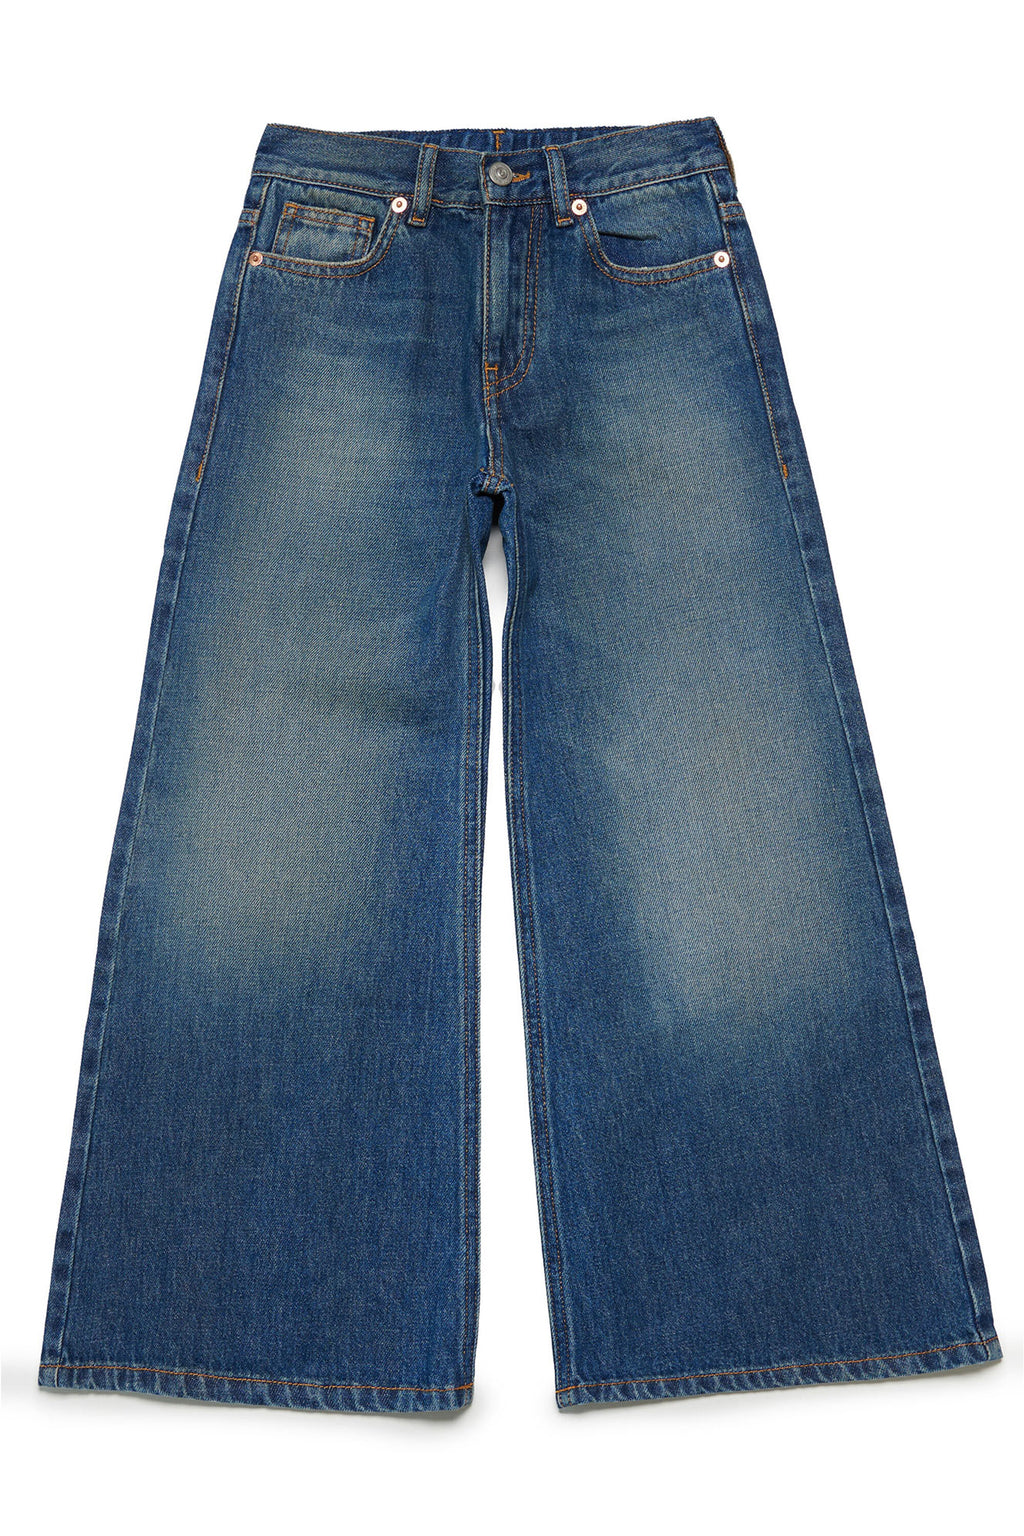 Vintage effect jeans